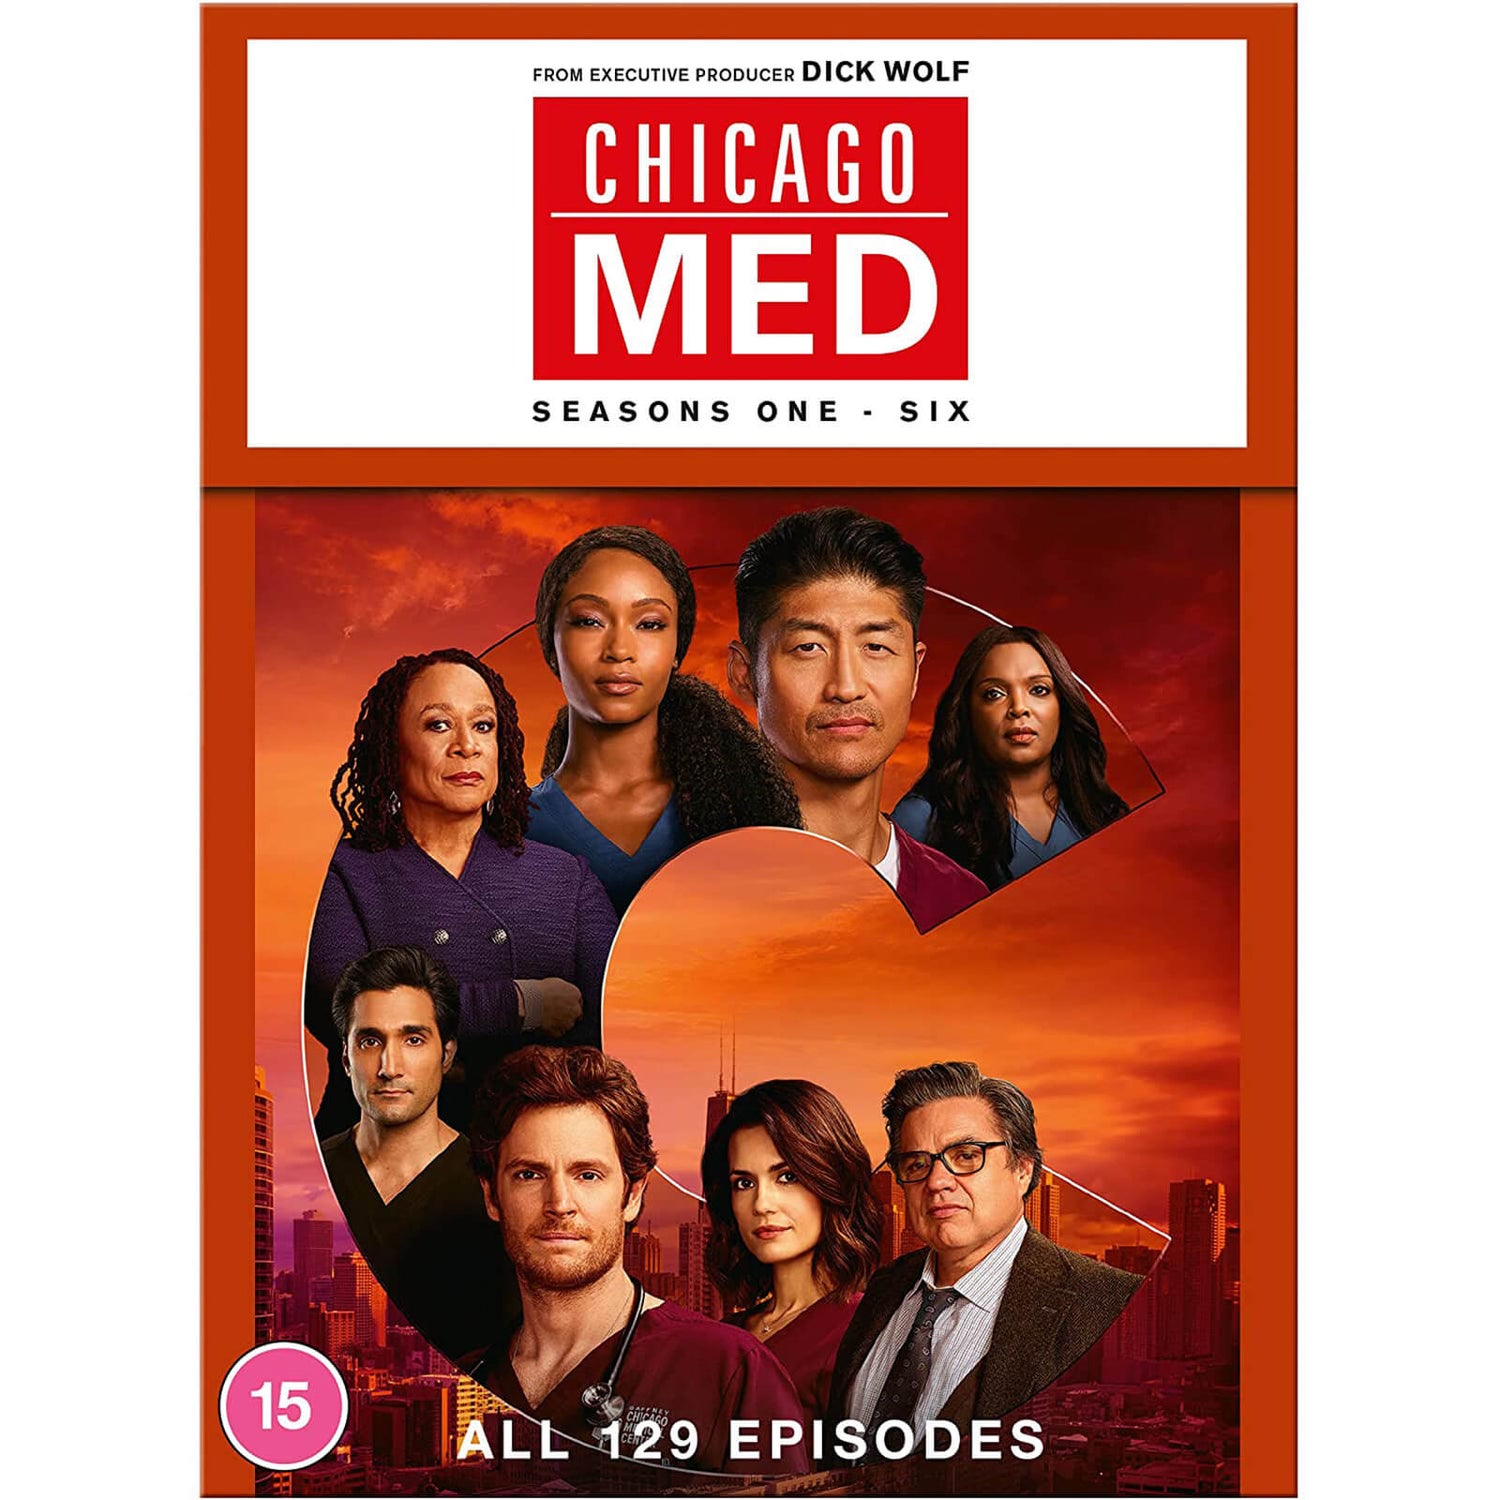 Chicago Med - Seasons 1-6